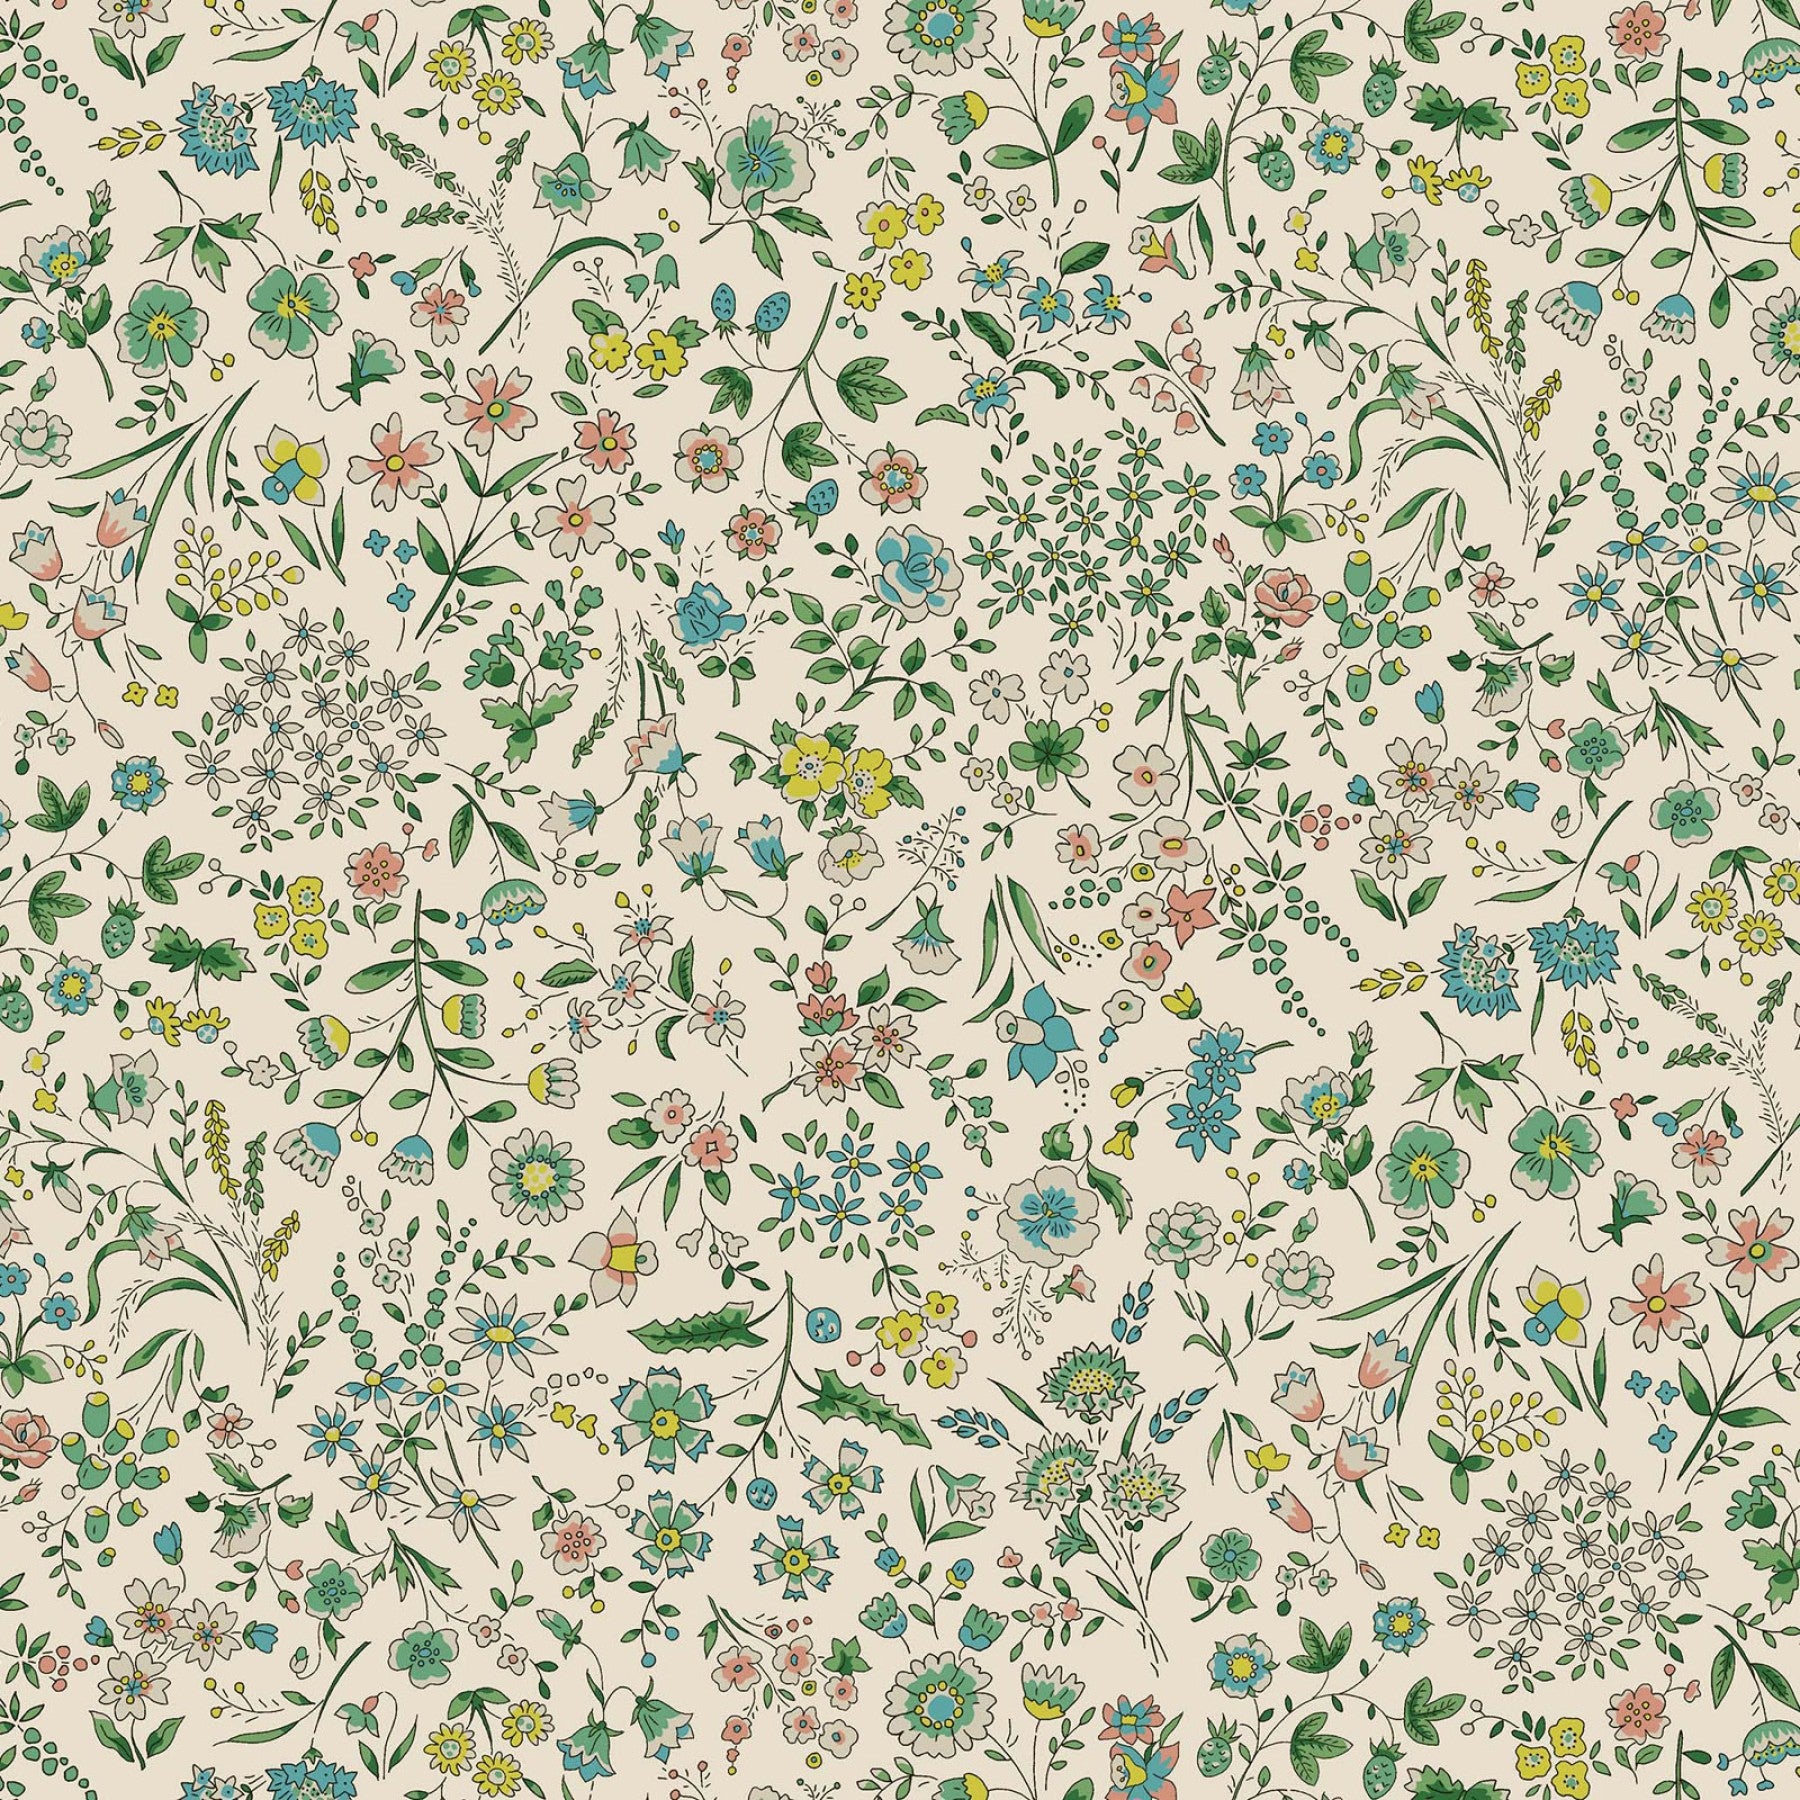 Botanist Florals in Green | Sheeting Cotton Linen